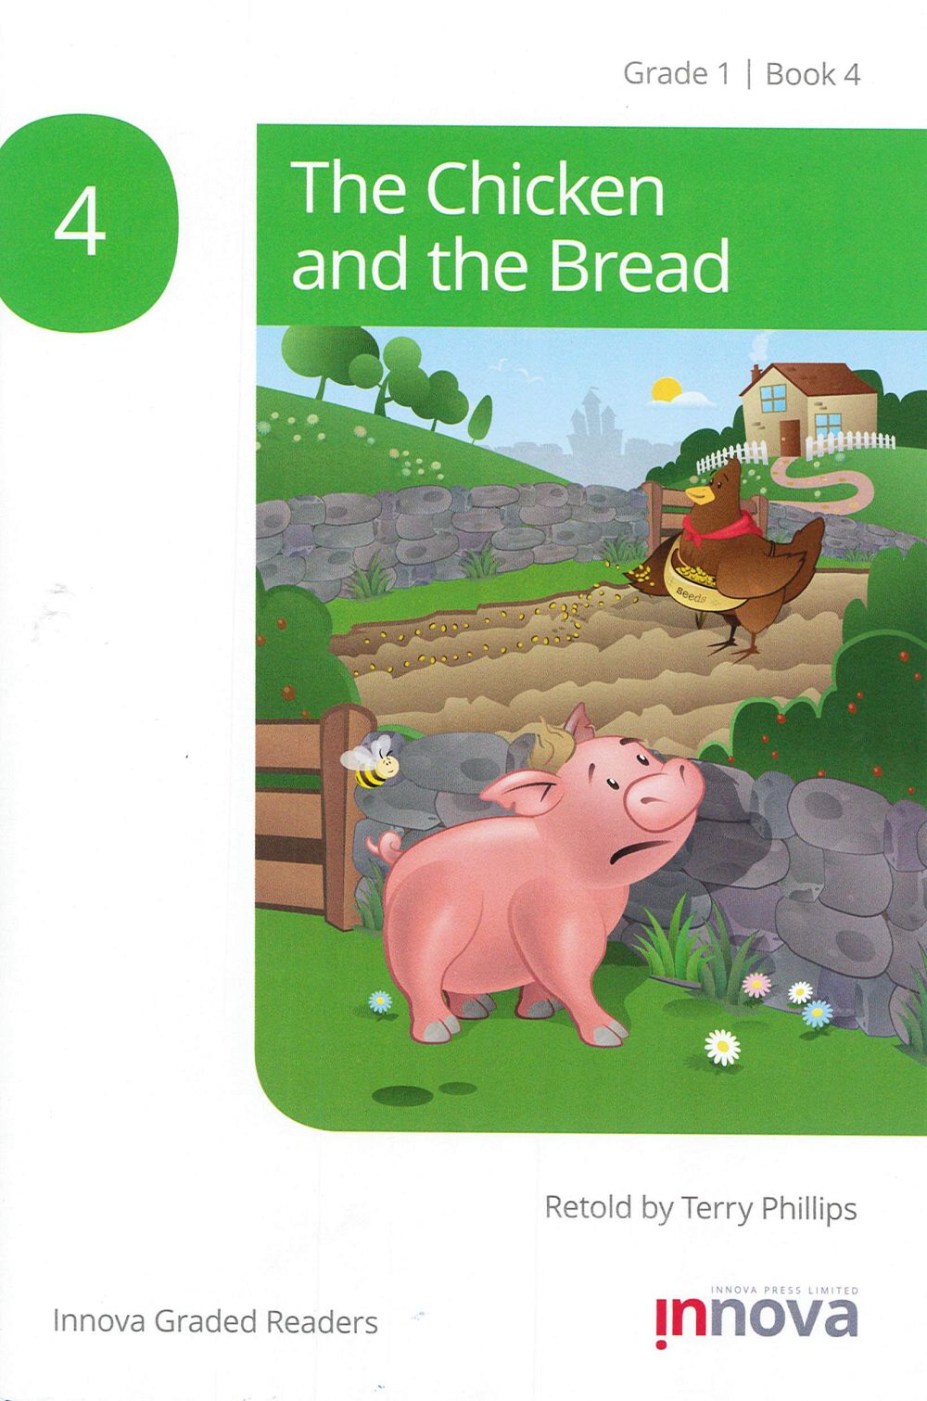 Innova Graded Readers Grade 1 (Book 4): The Chicken and the Bread